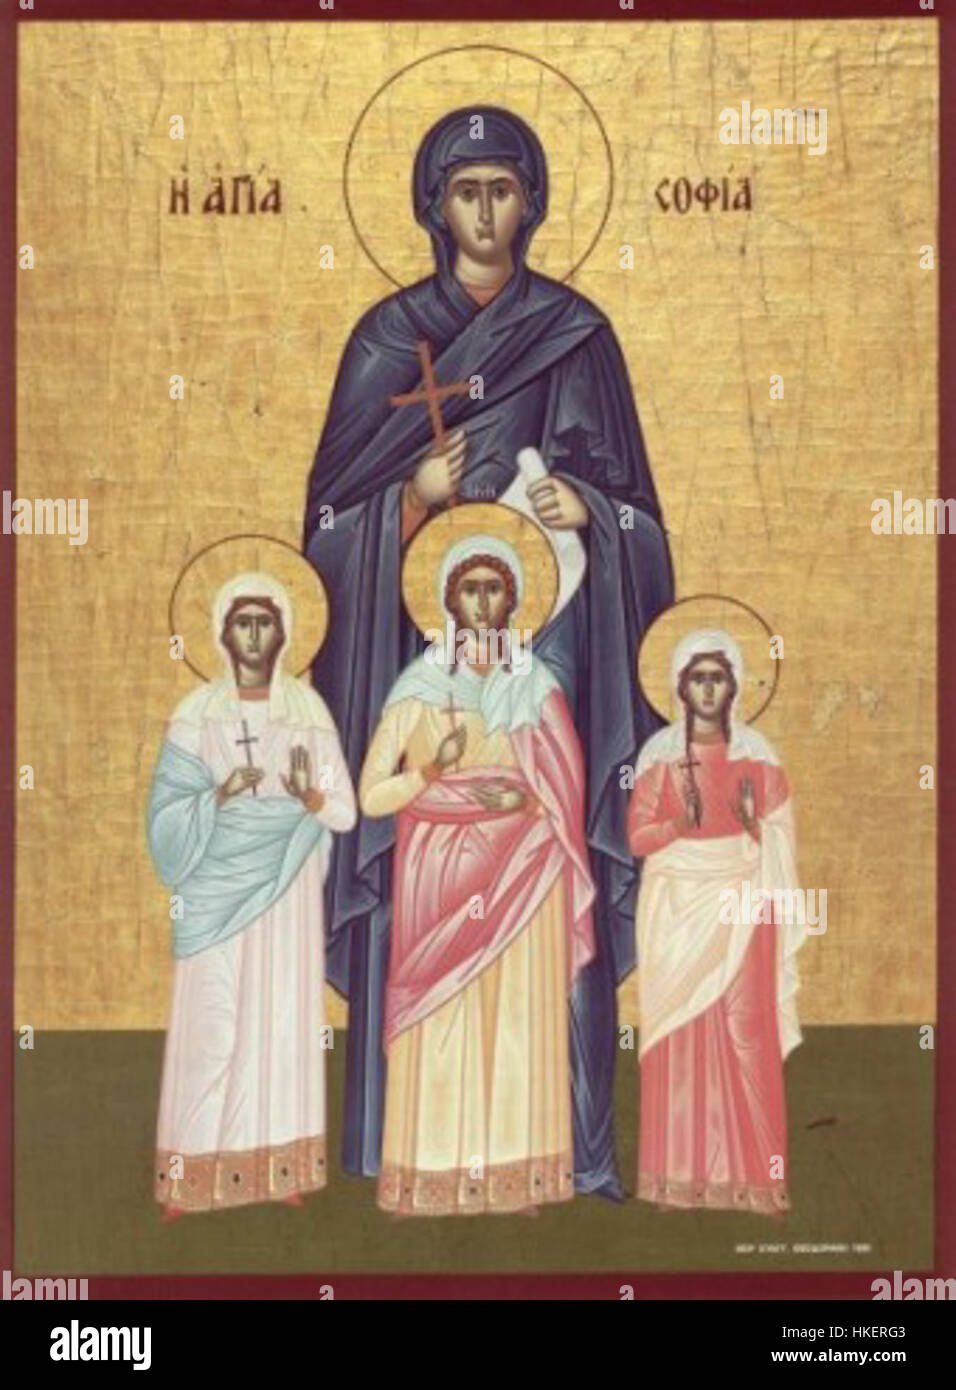 Saint sophia (byzantine icon) Stock Photo